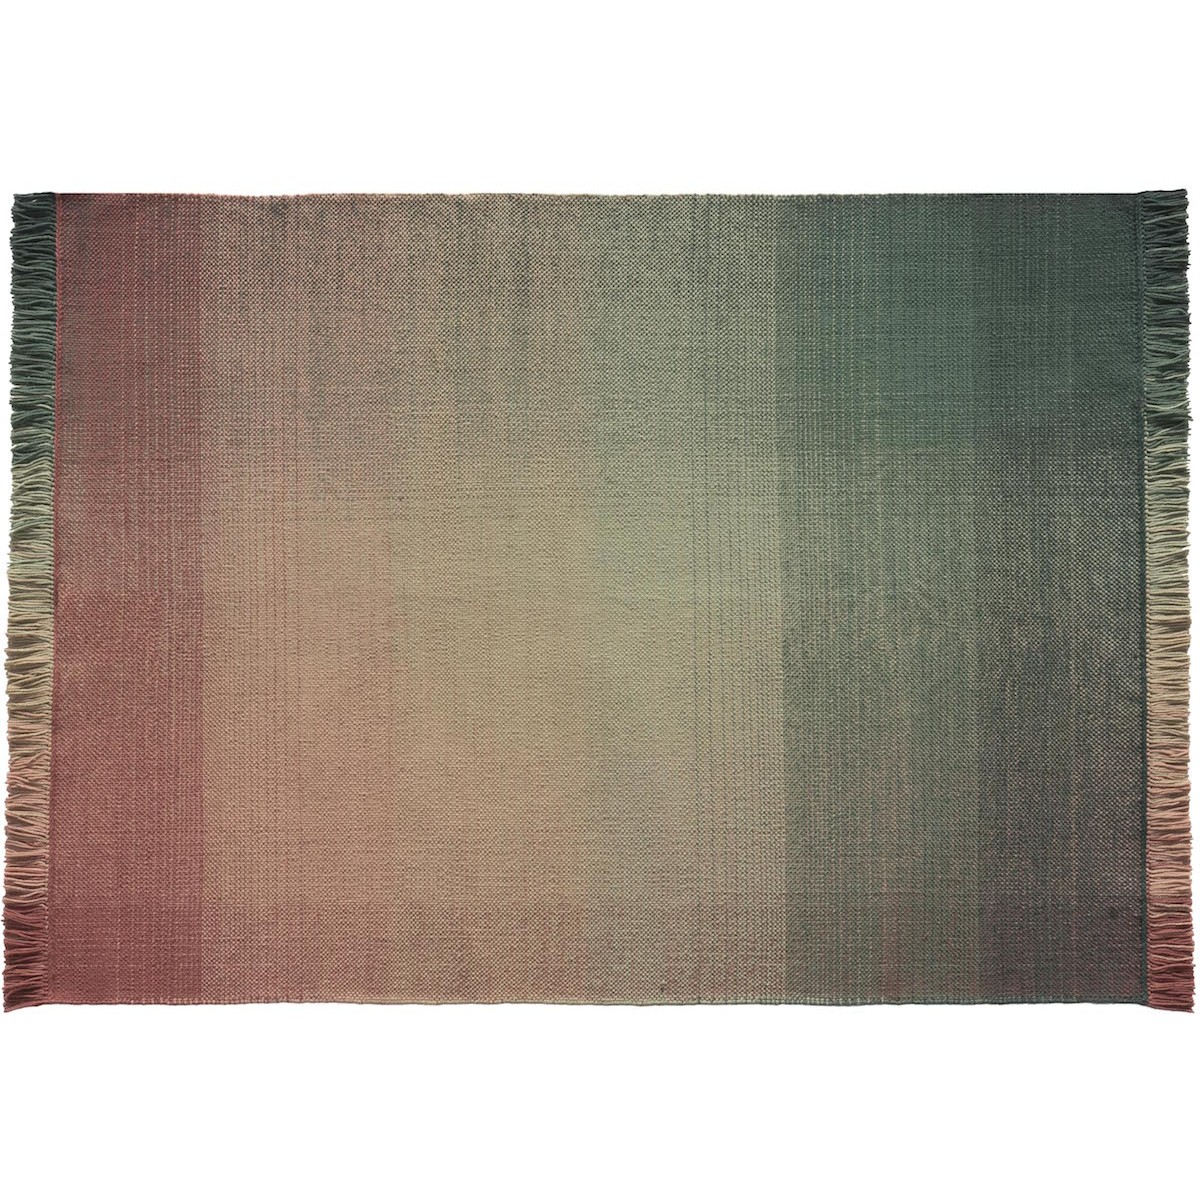 200x300cm - Palette 3 - polyethylene Shade rug